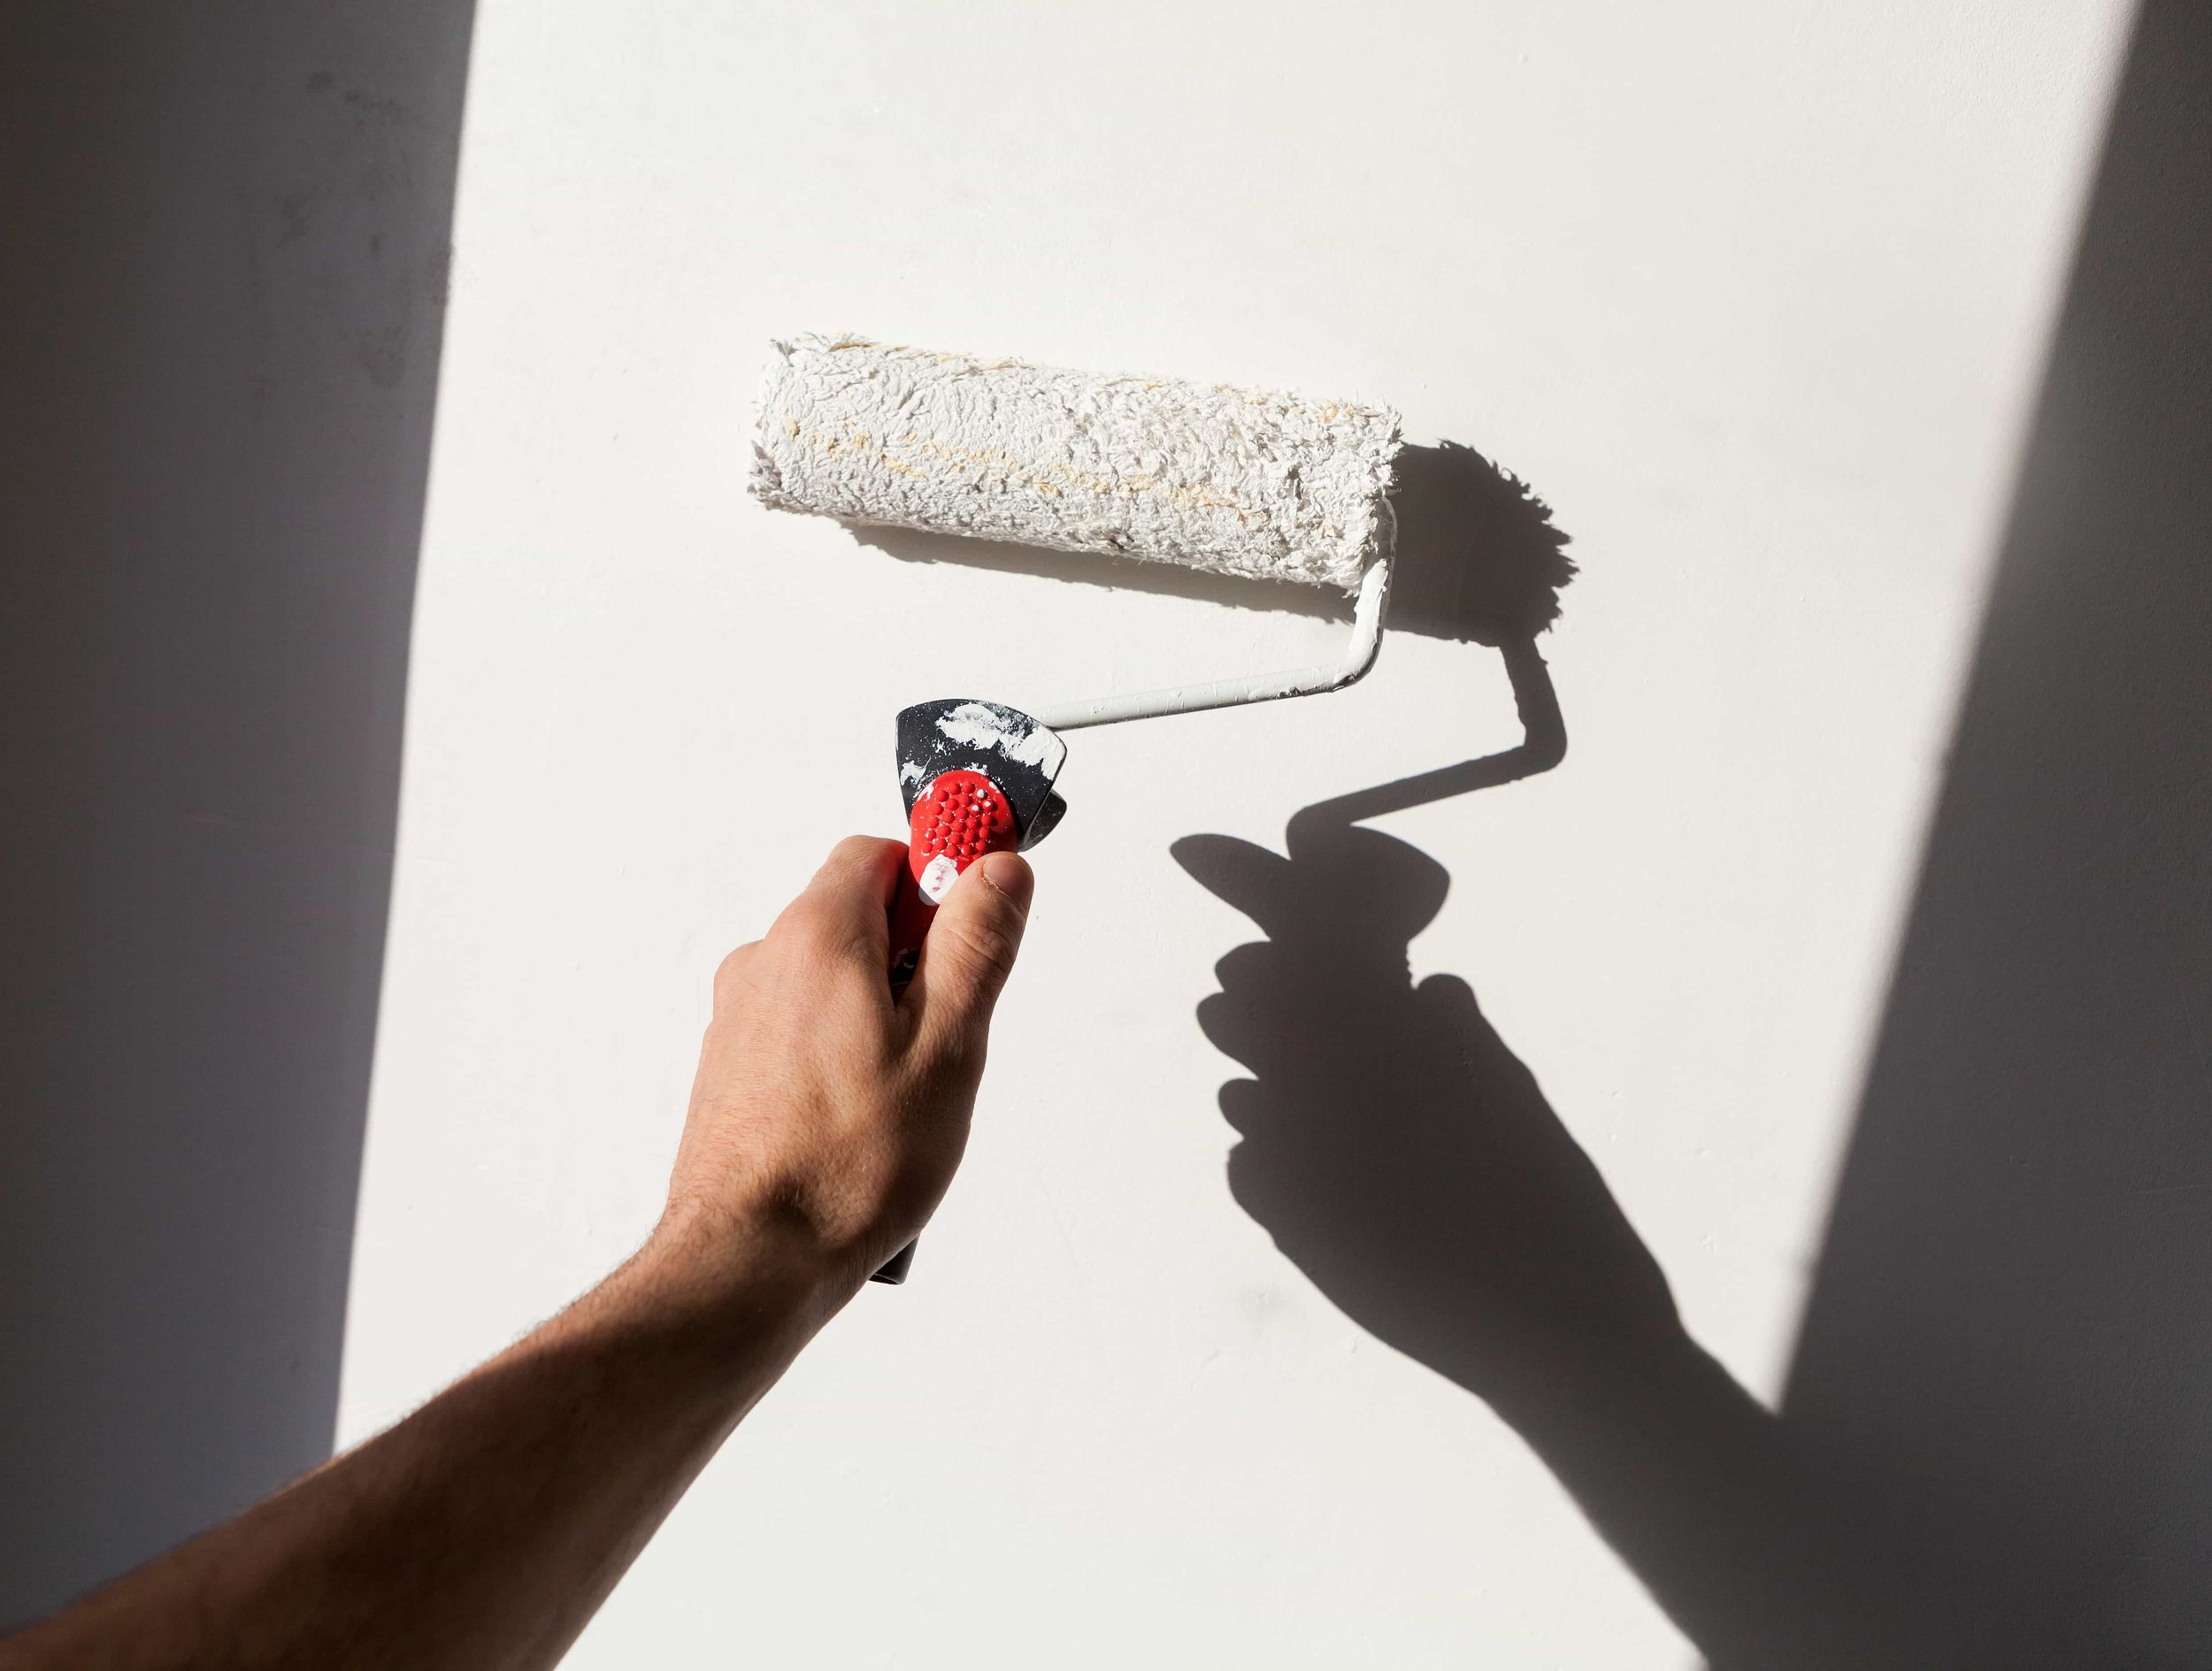 Painter with brush climbing ladder during renovation work